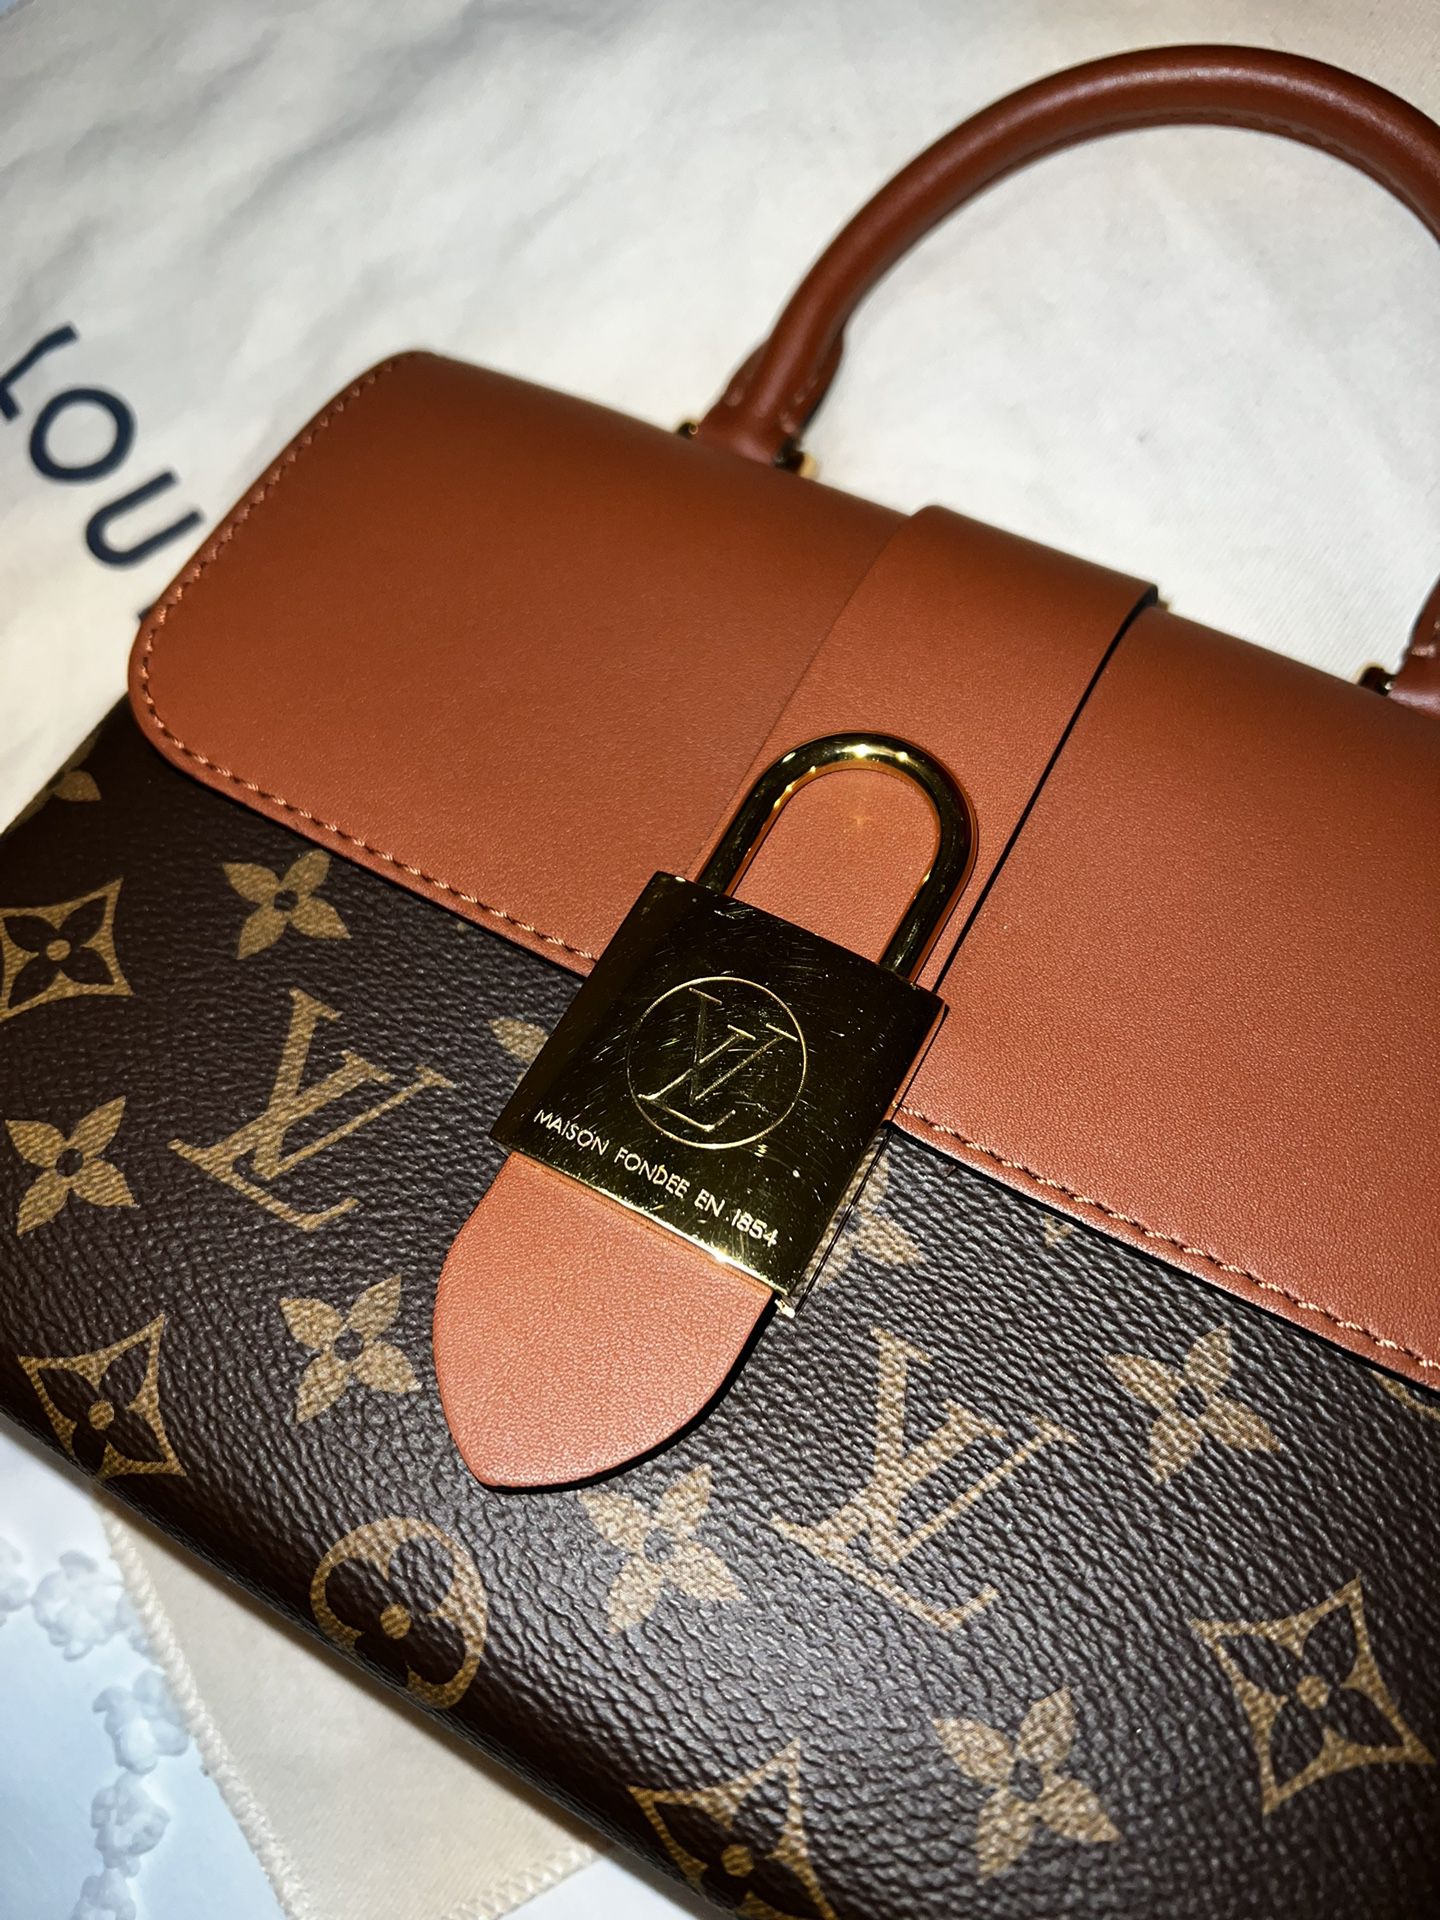 Authentic near new Louis Vuitton Locky BB handbag with original